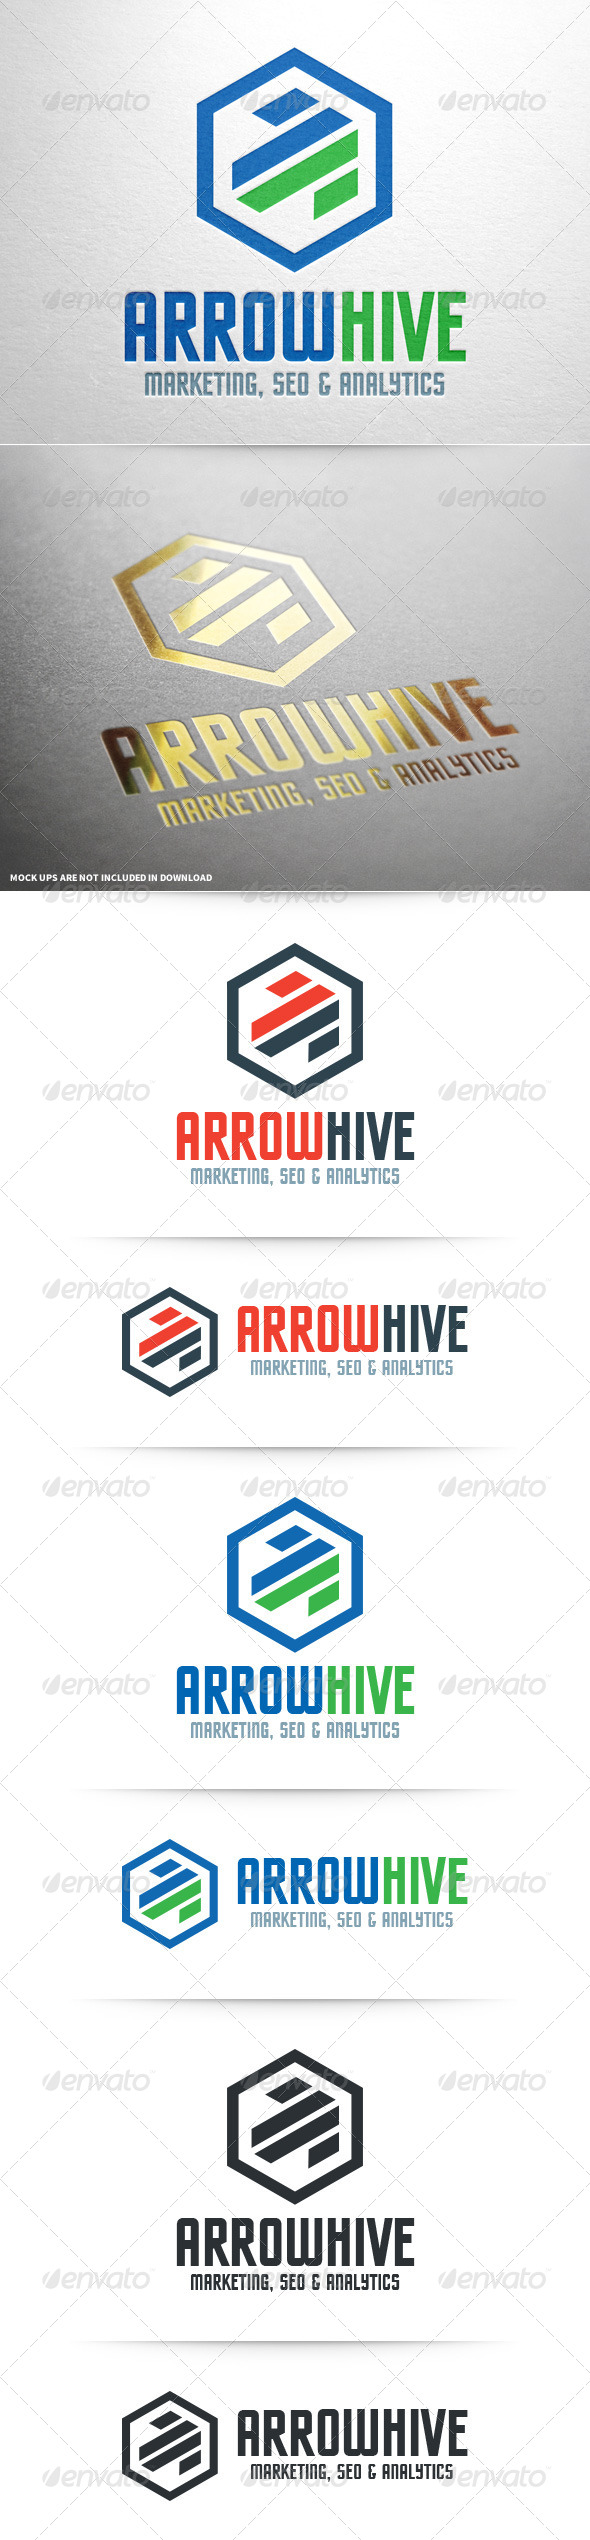 Arrow Hive Logo Template